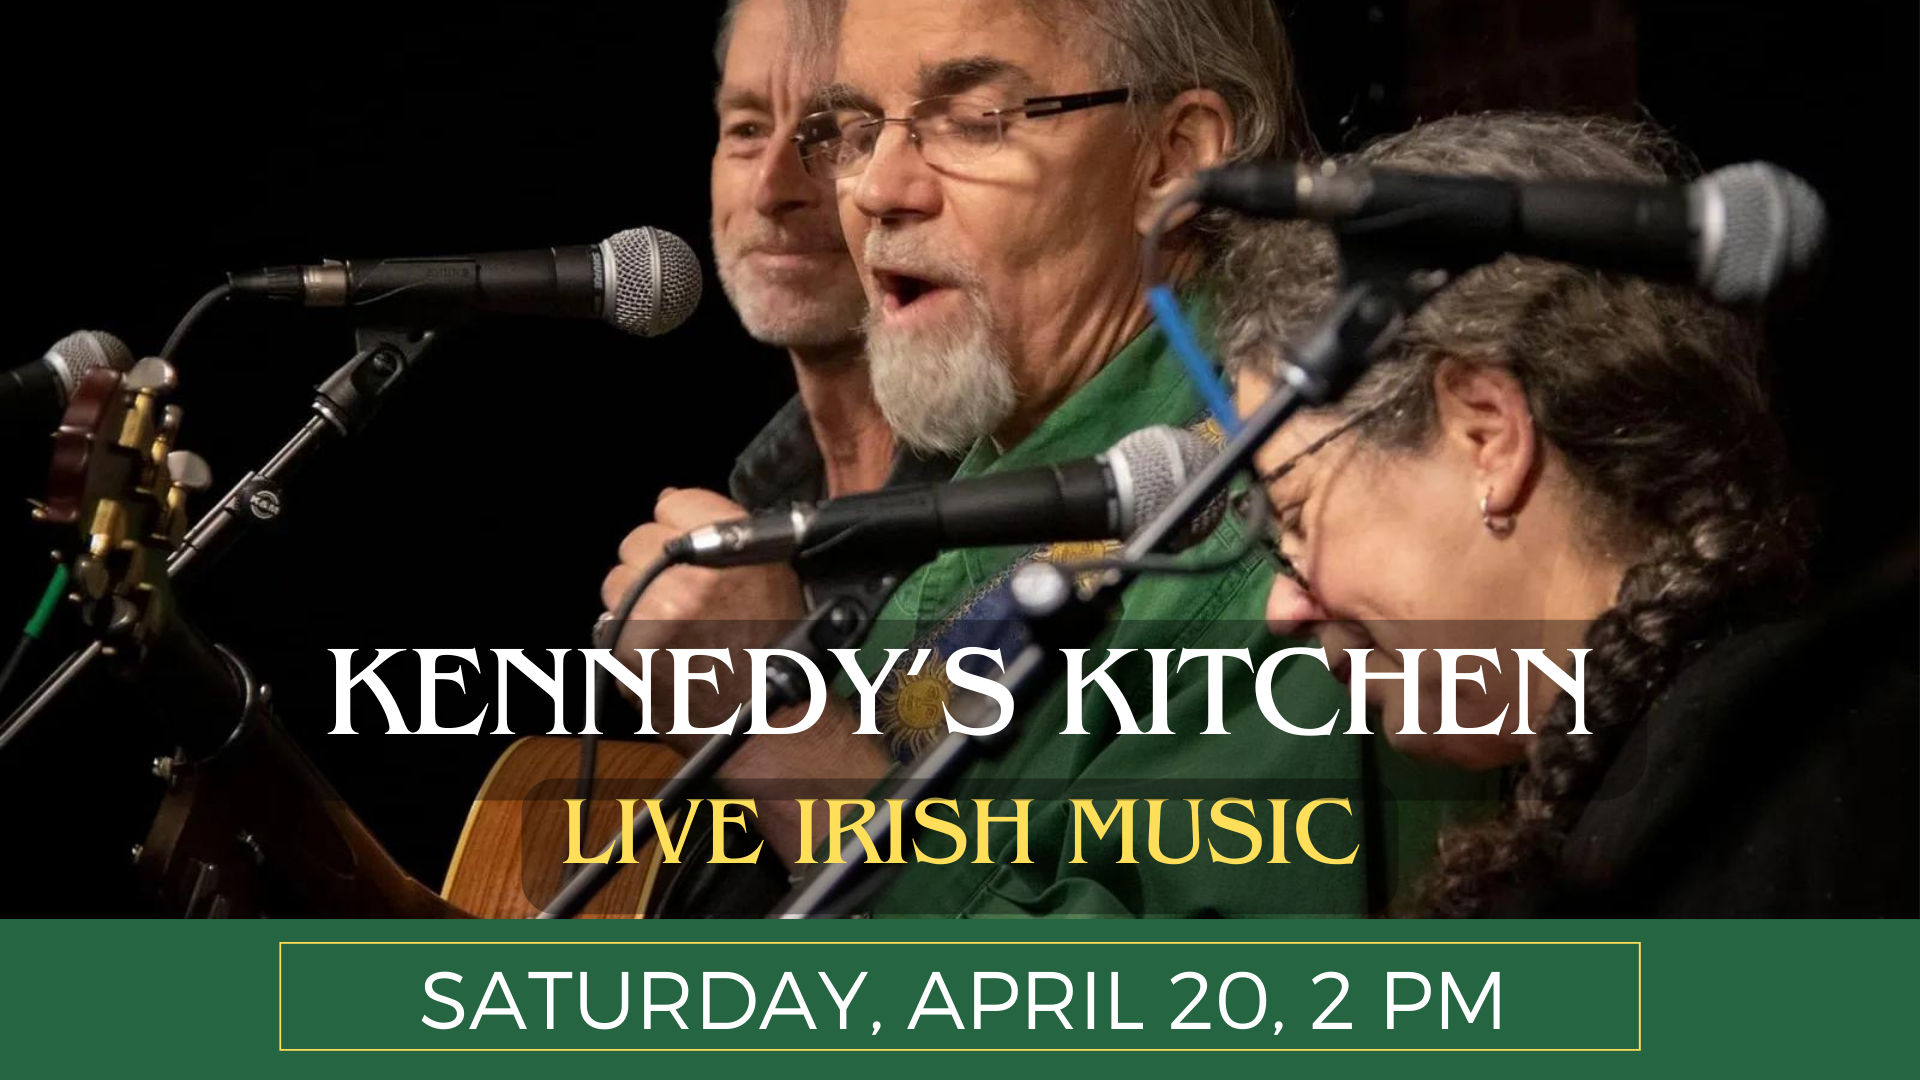 Kennedy's Kitchen live music, Saturday, April 20, 2 pm